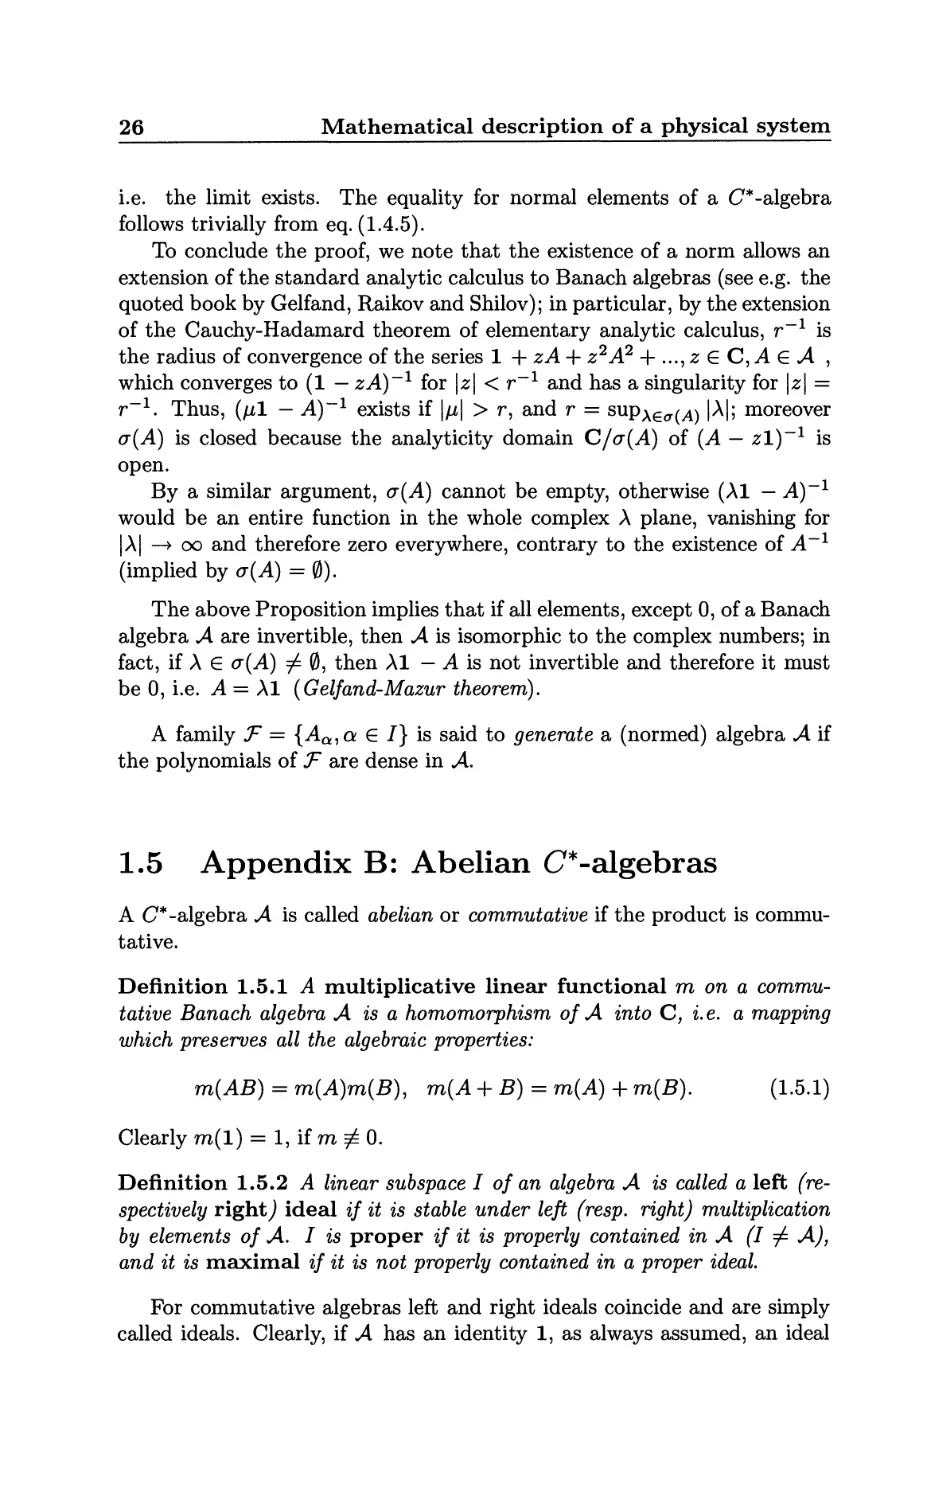 1.5 Appendix B: Abelian C^*-algebras